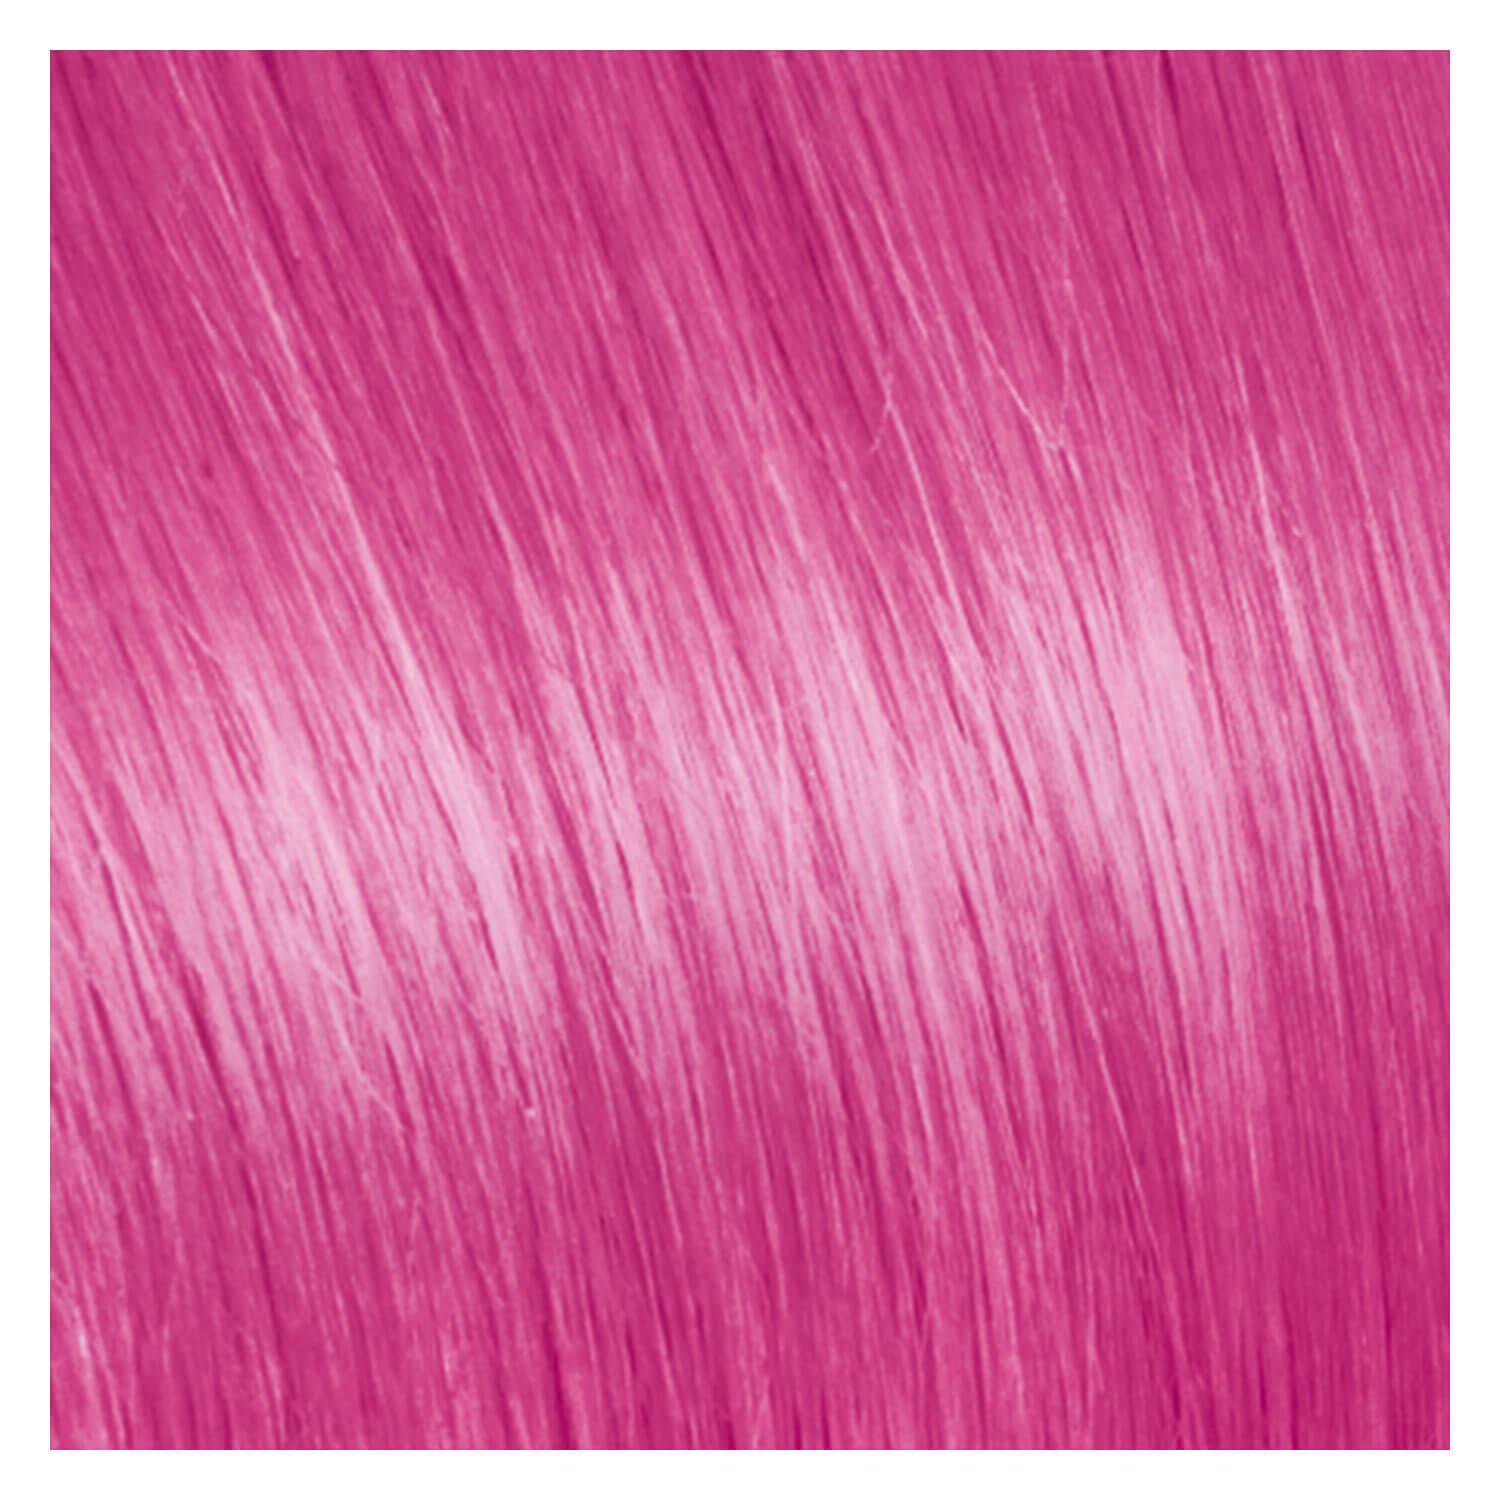 SHE Bonding-System Hair Extensions Fantasy Straight - Fuchsia 55/60cm